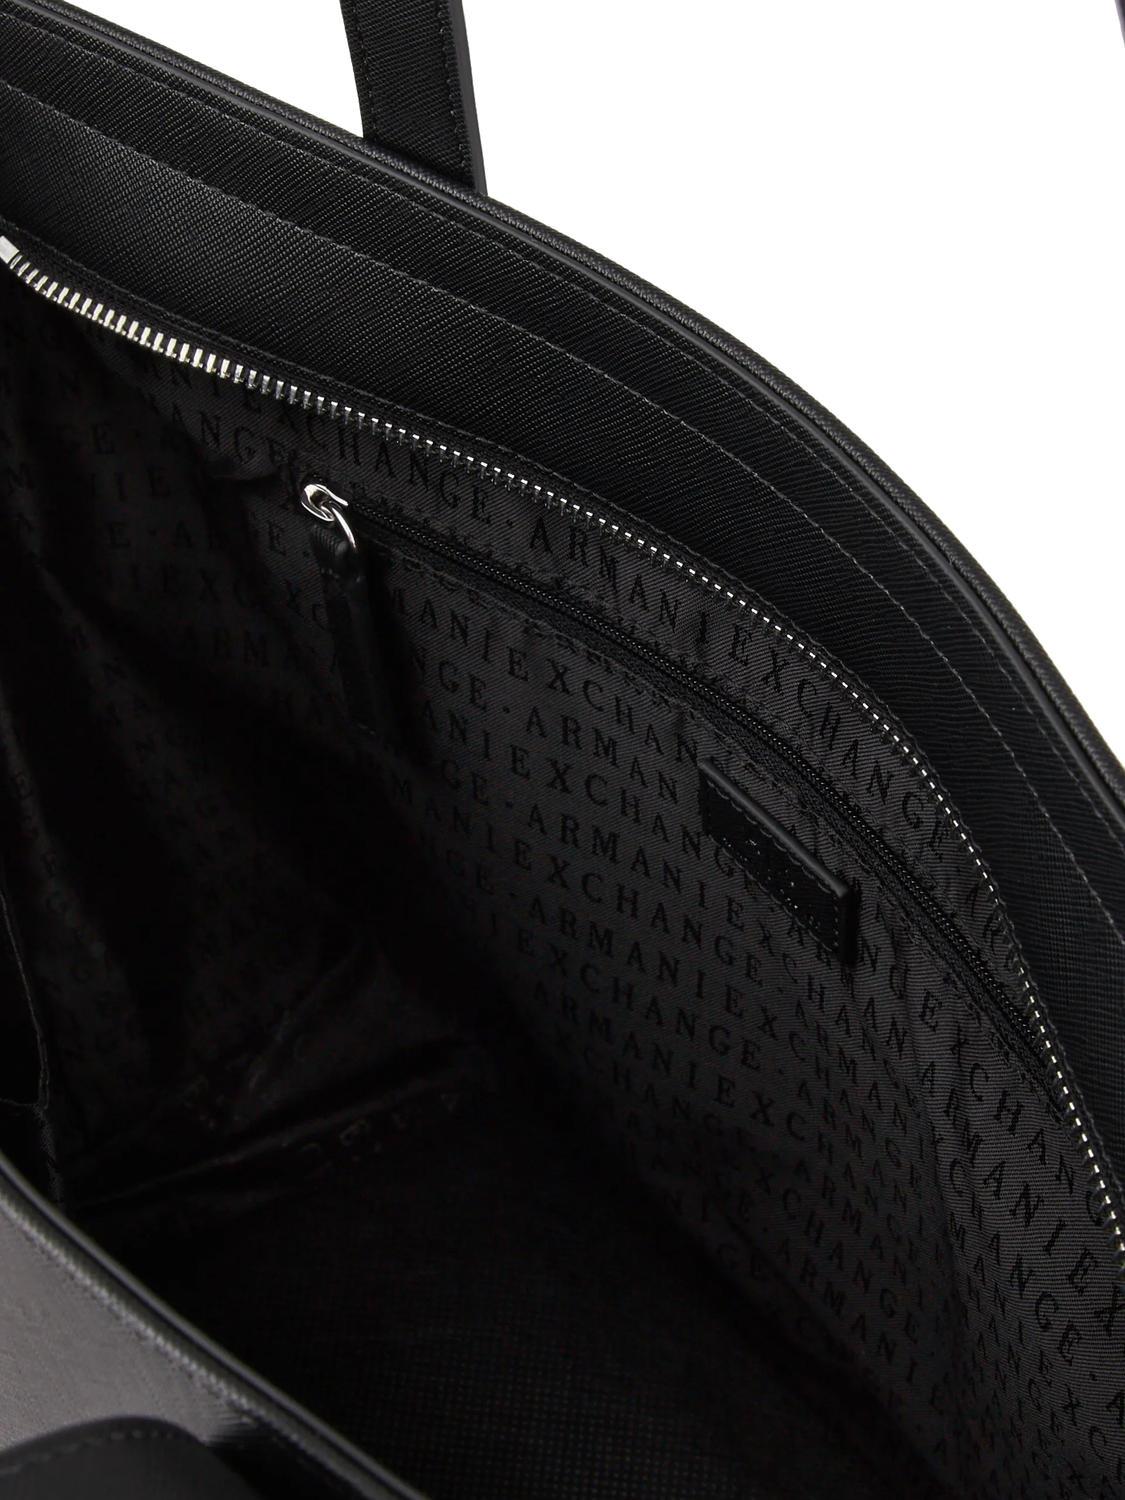 Armani Exchange Men's Messenger Bag - Black | TheHut.com